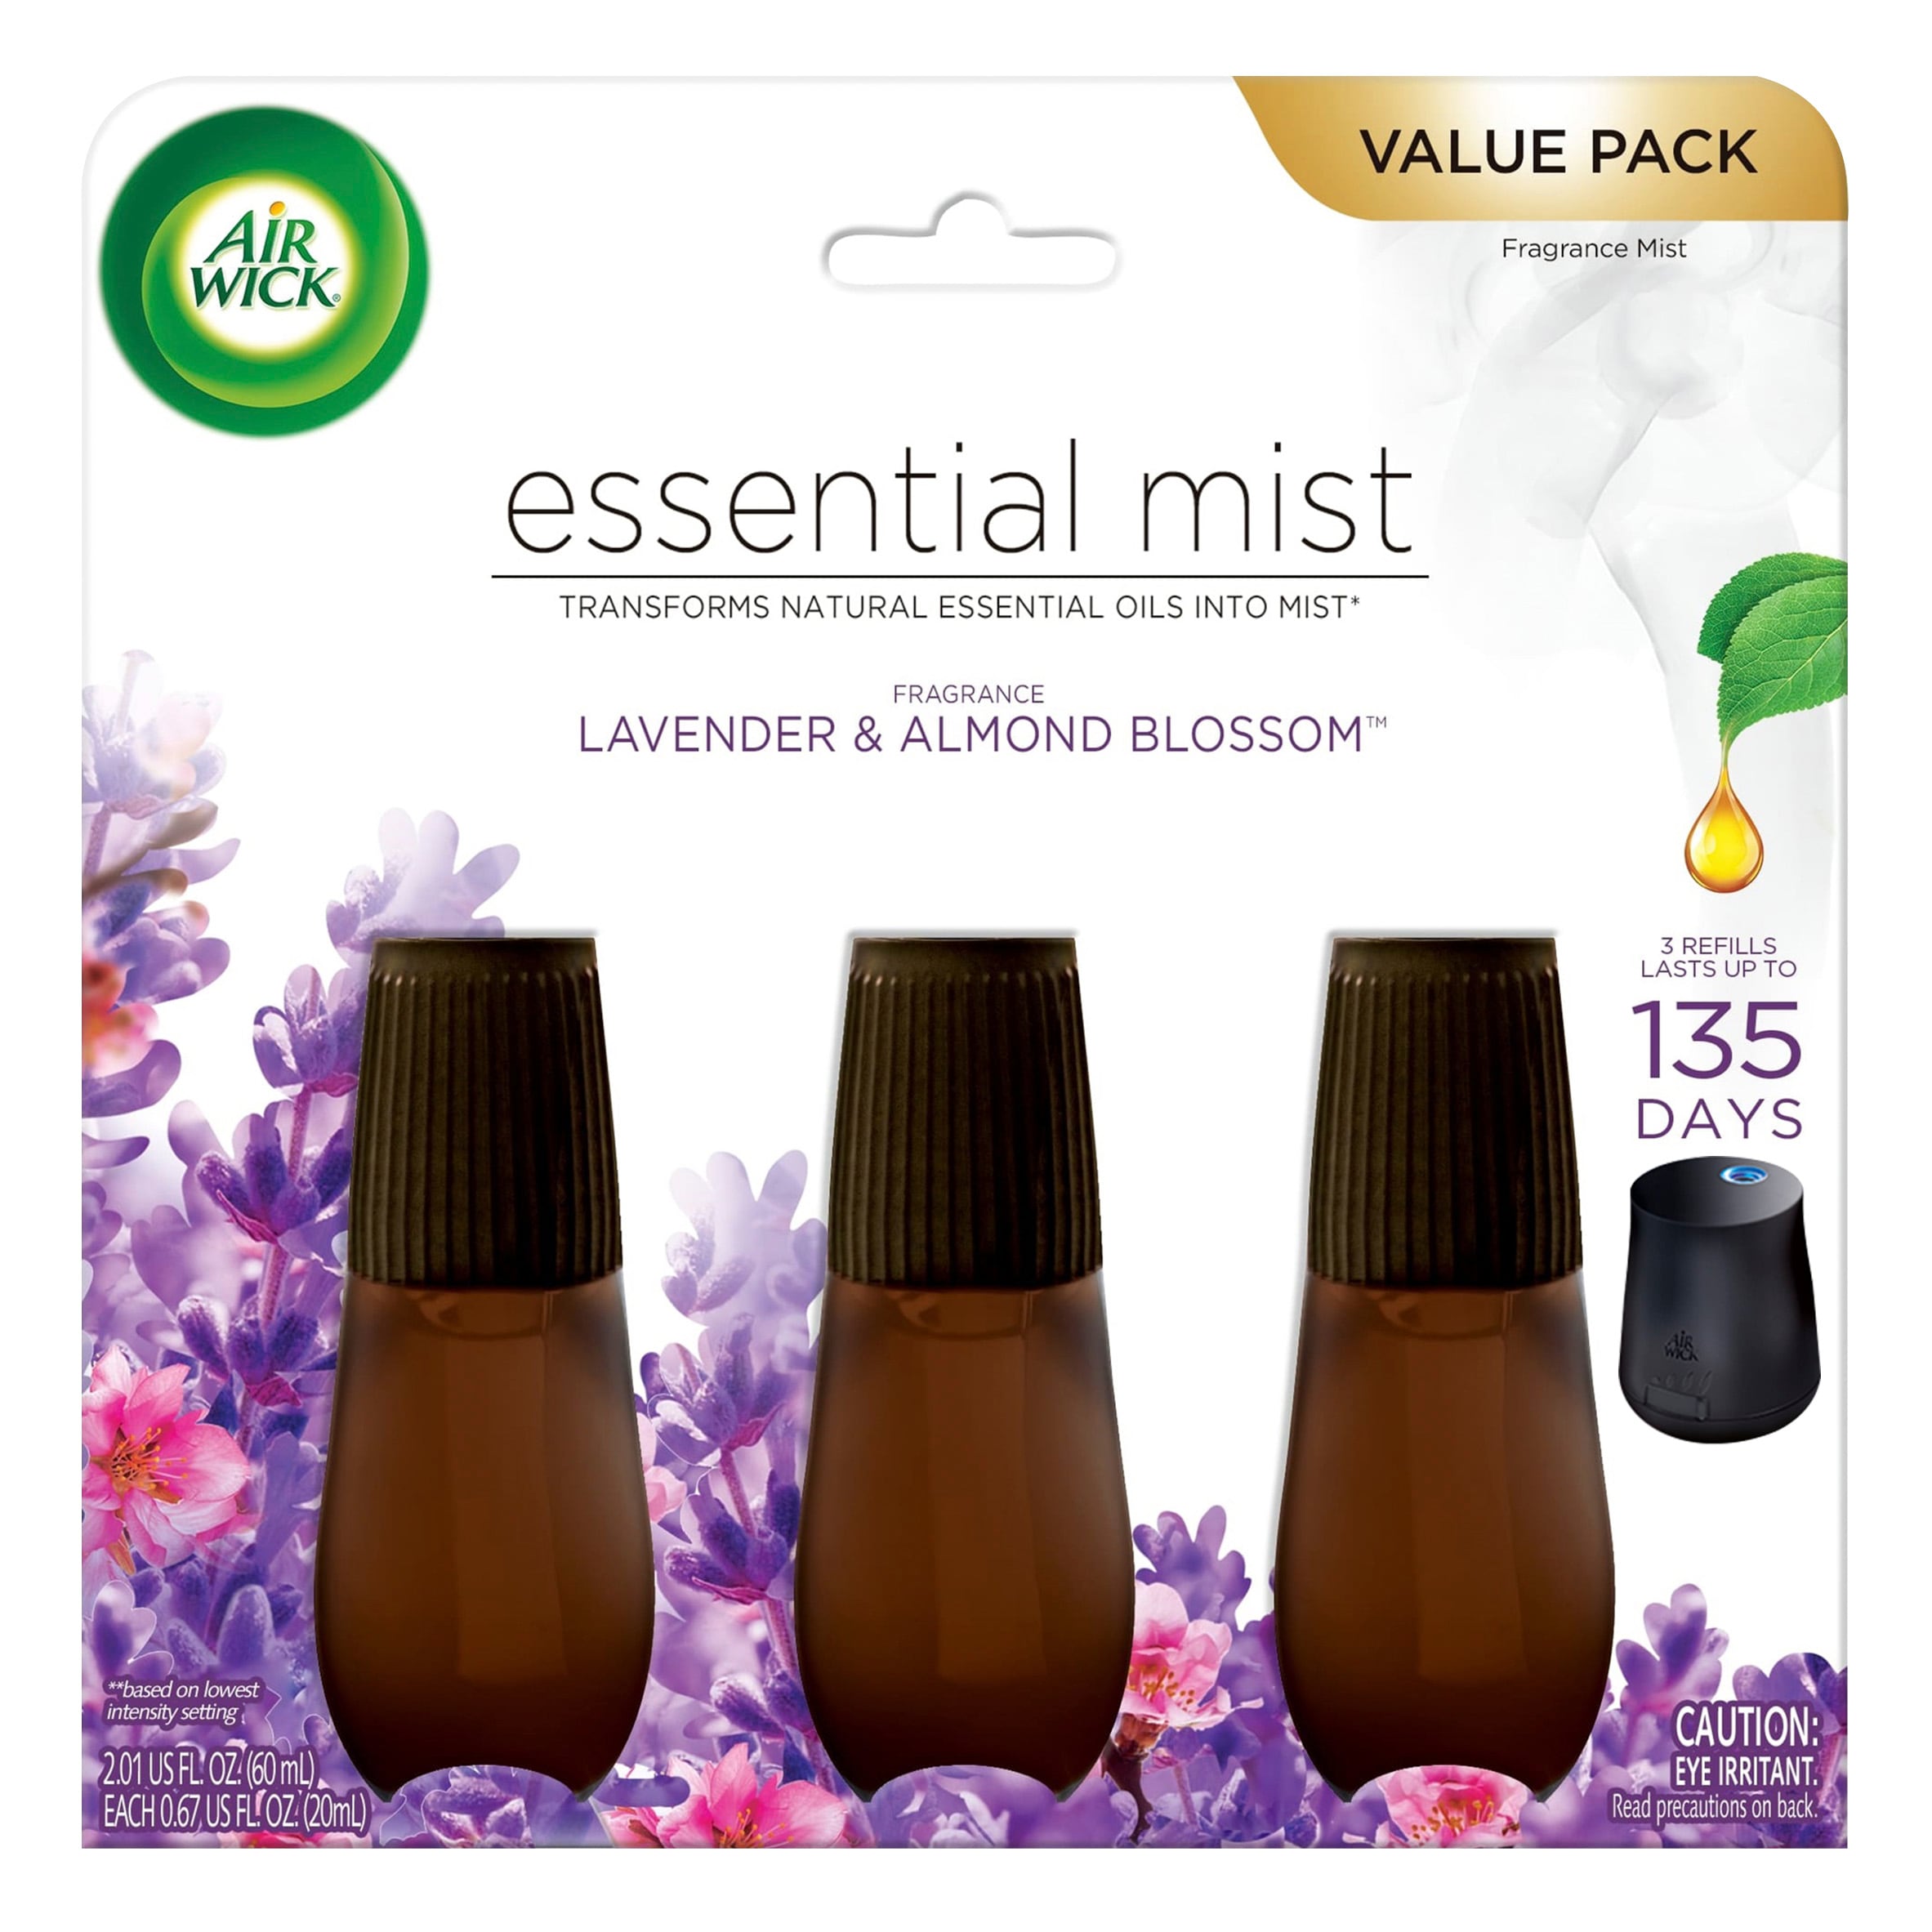 Air Wick Essential Mist Fragrance Mist, Lavender & Almond Blossom, Refills, Value Pack - 3 refills, 2.02 fl oz